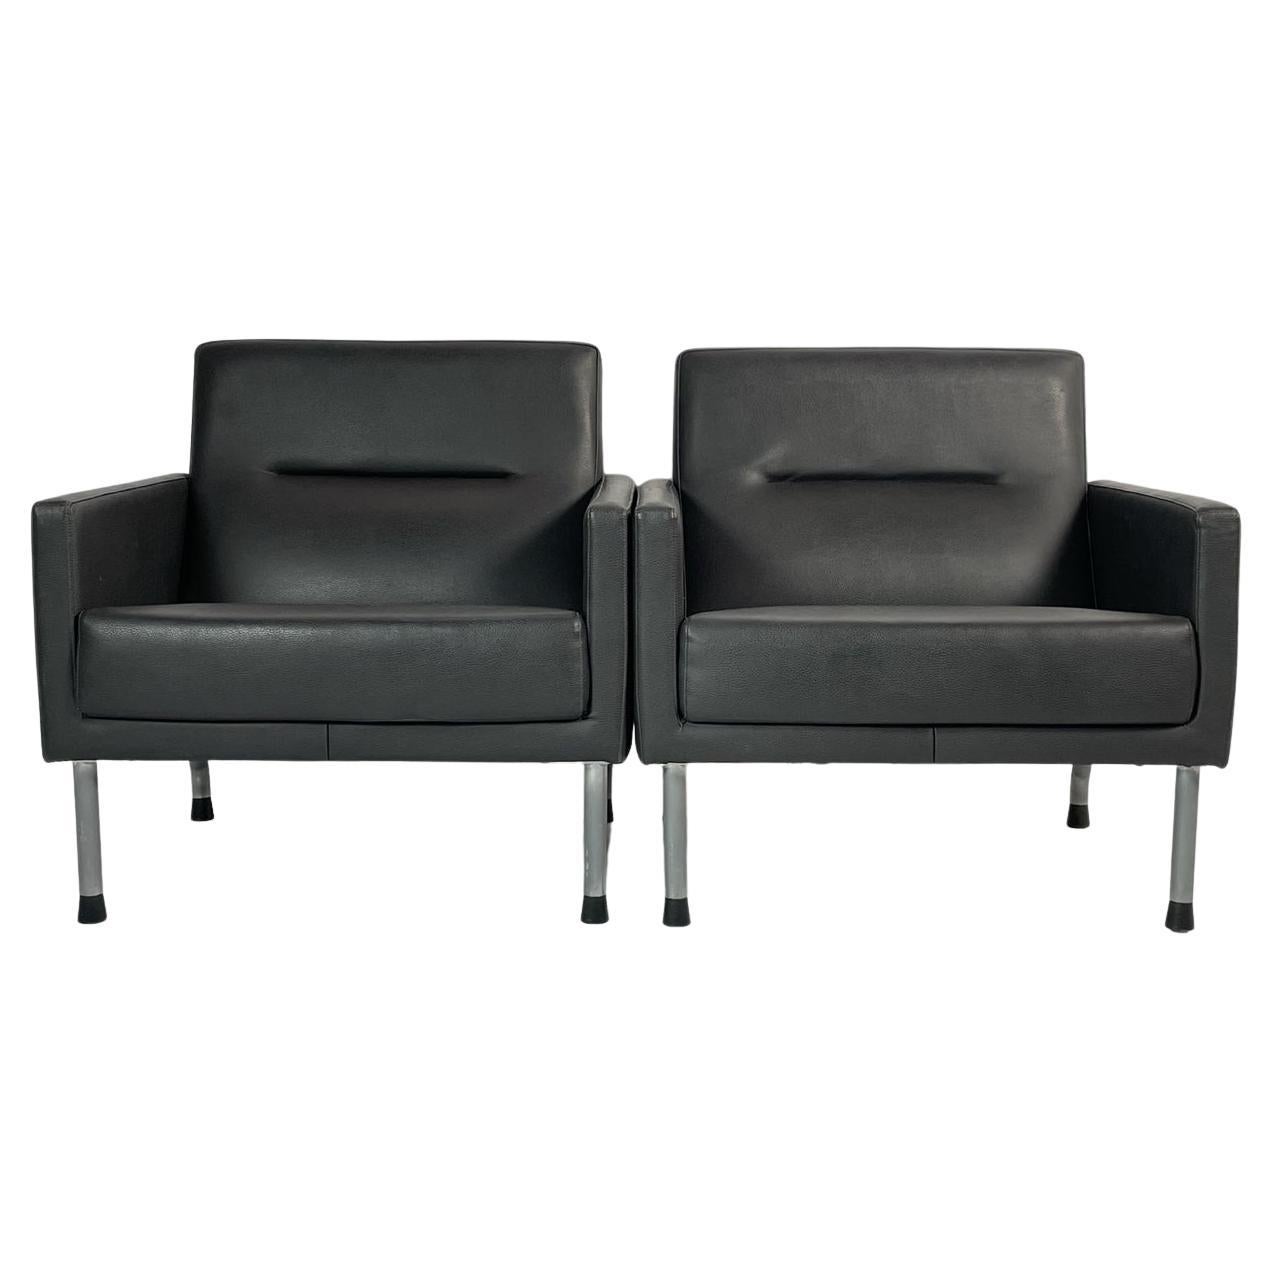 Pair of Highback-Sidewalk Lounge Chairs by Brayton International For Sale